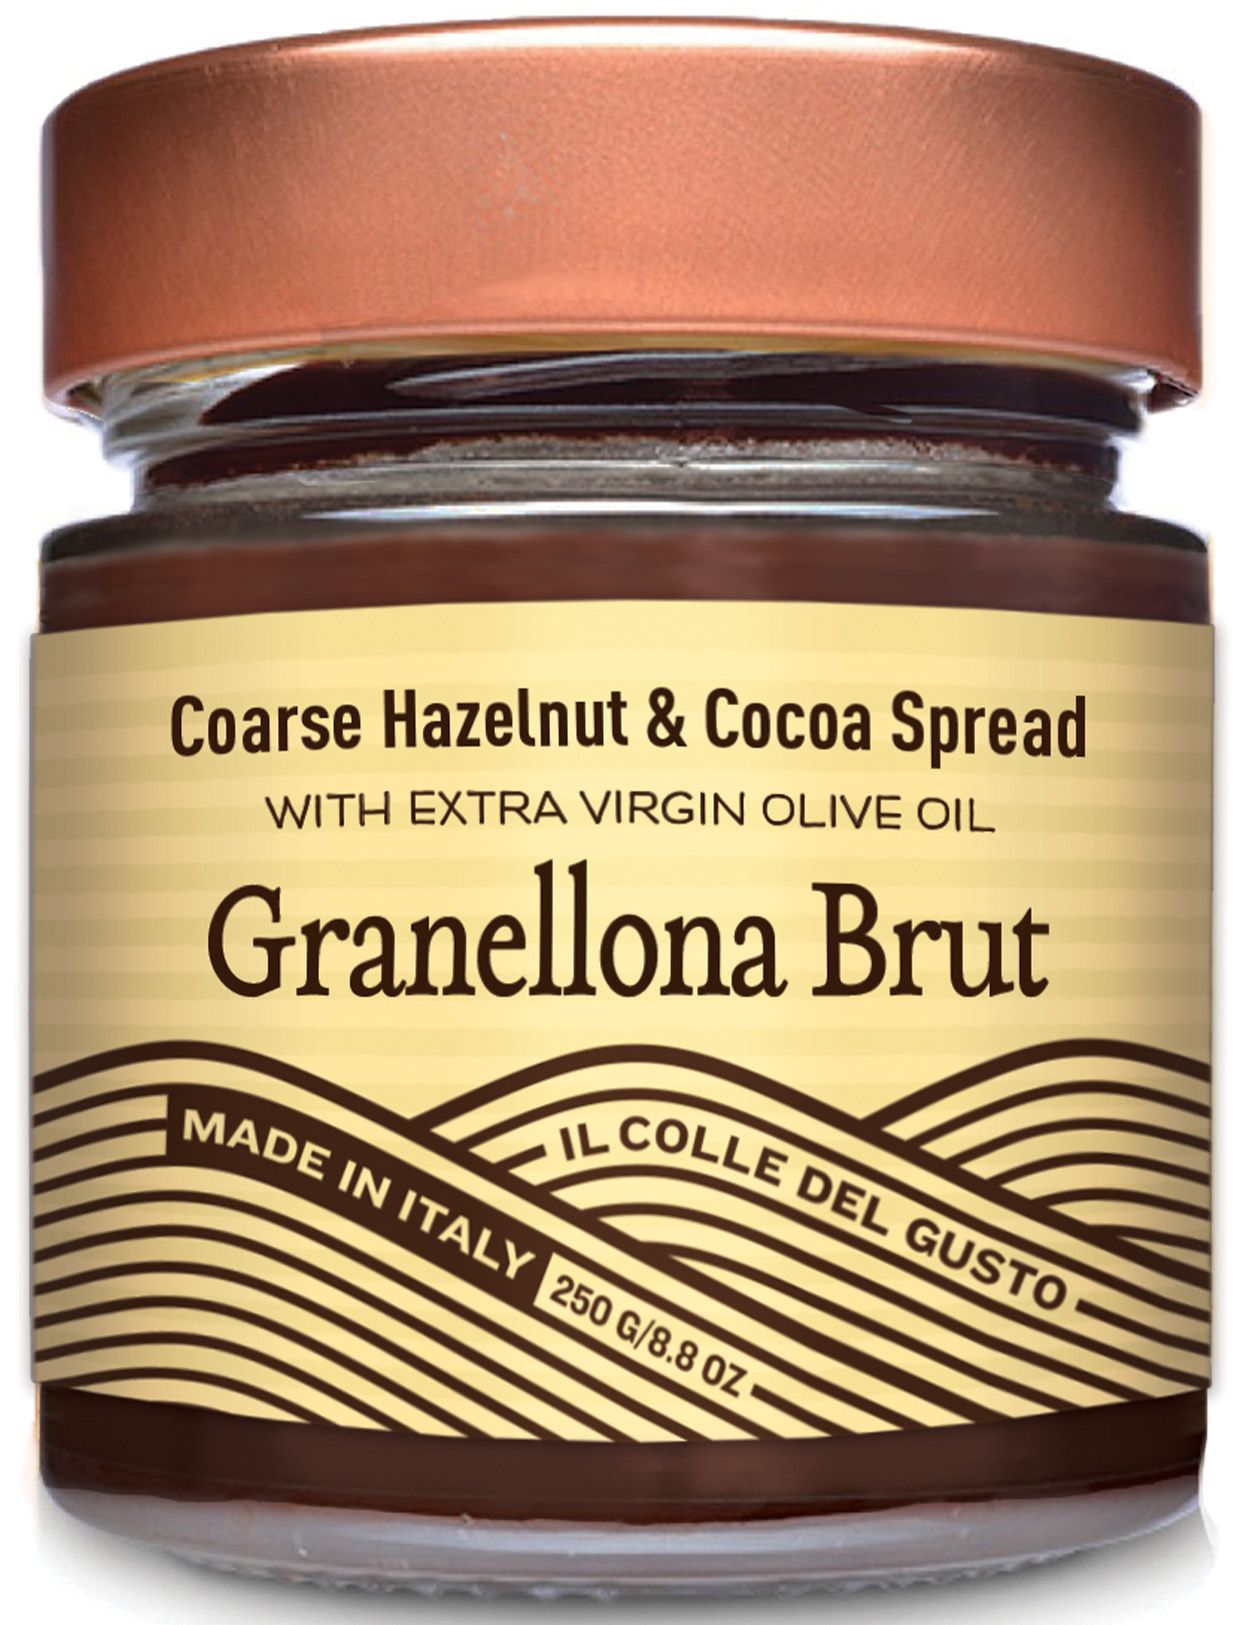 Granellona Brut - Coarse Hazelnut Chocolate Spread with Extra Virgin Olive Oil